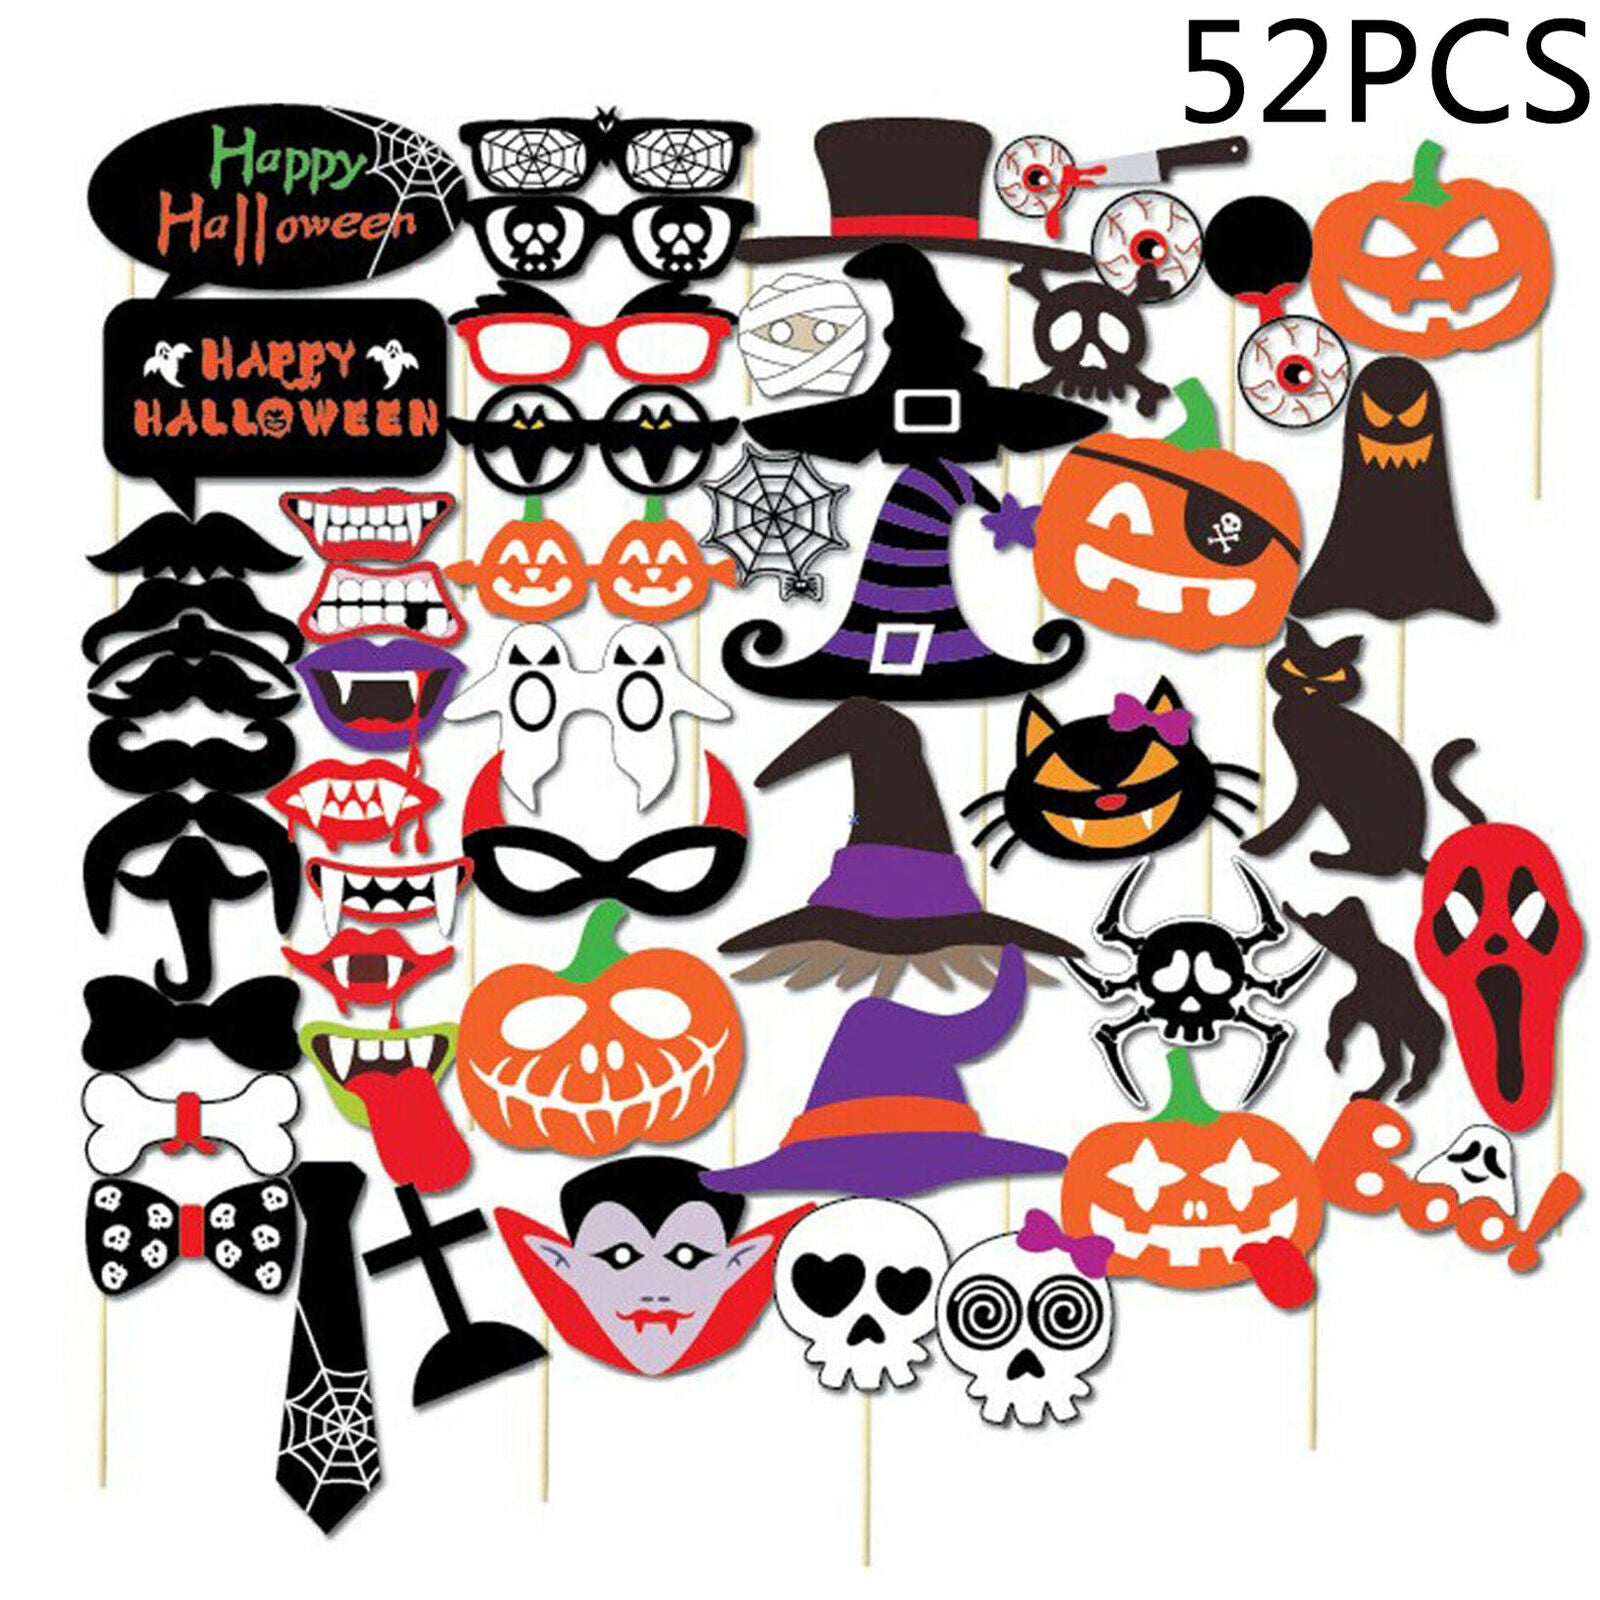 52PCS Halloween Party Card Masks Pumpkin Photo Booth Props Supplies Decorations